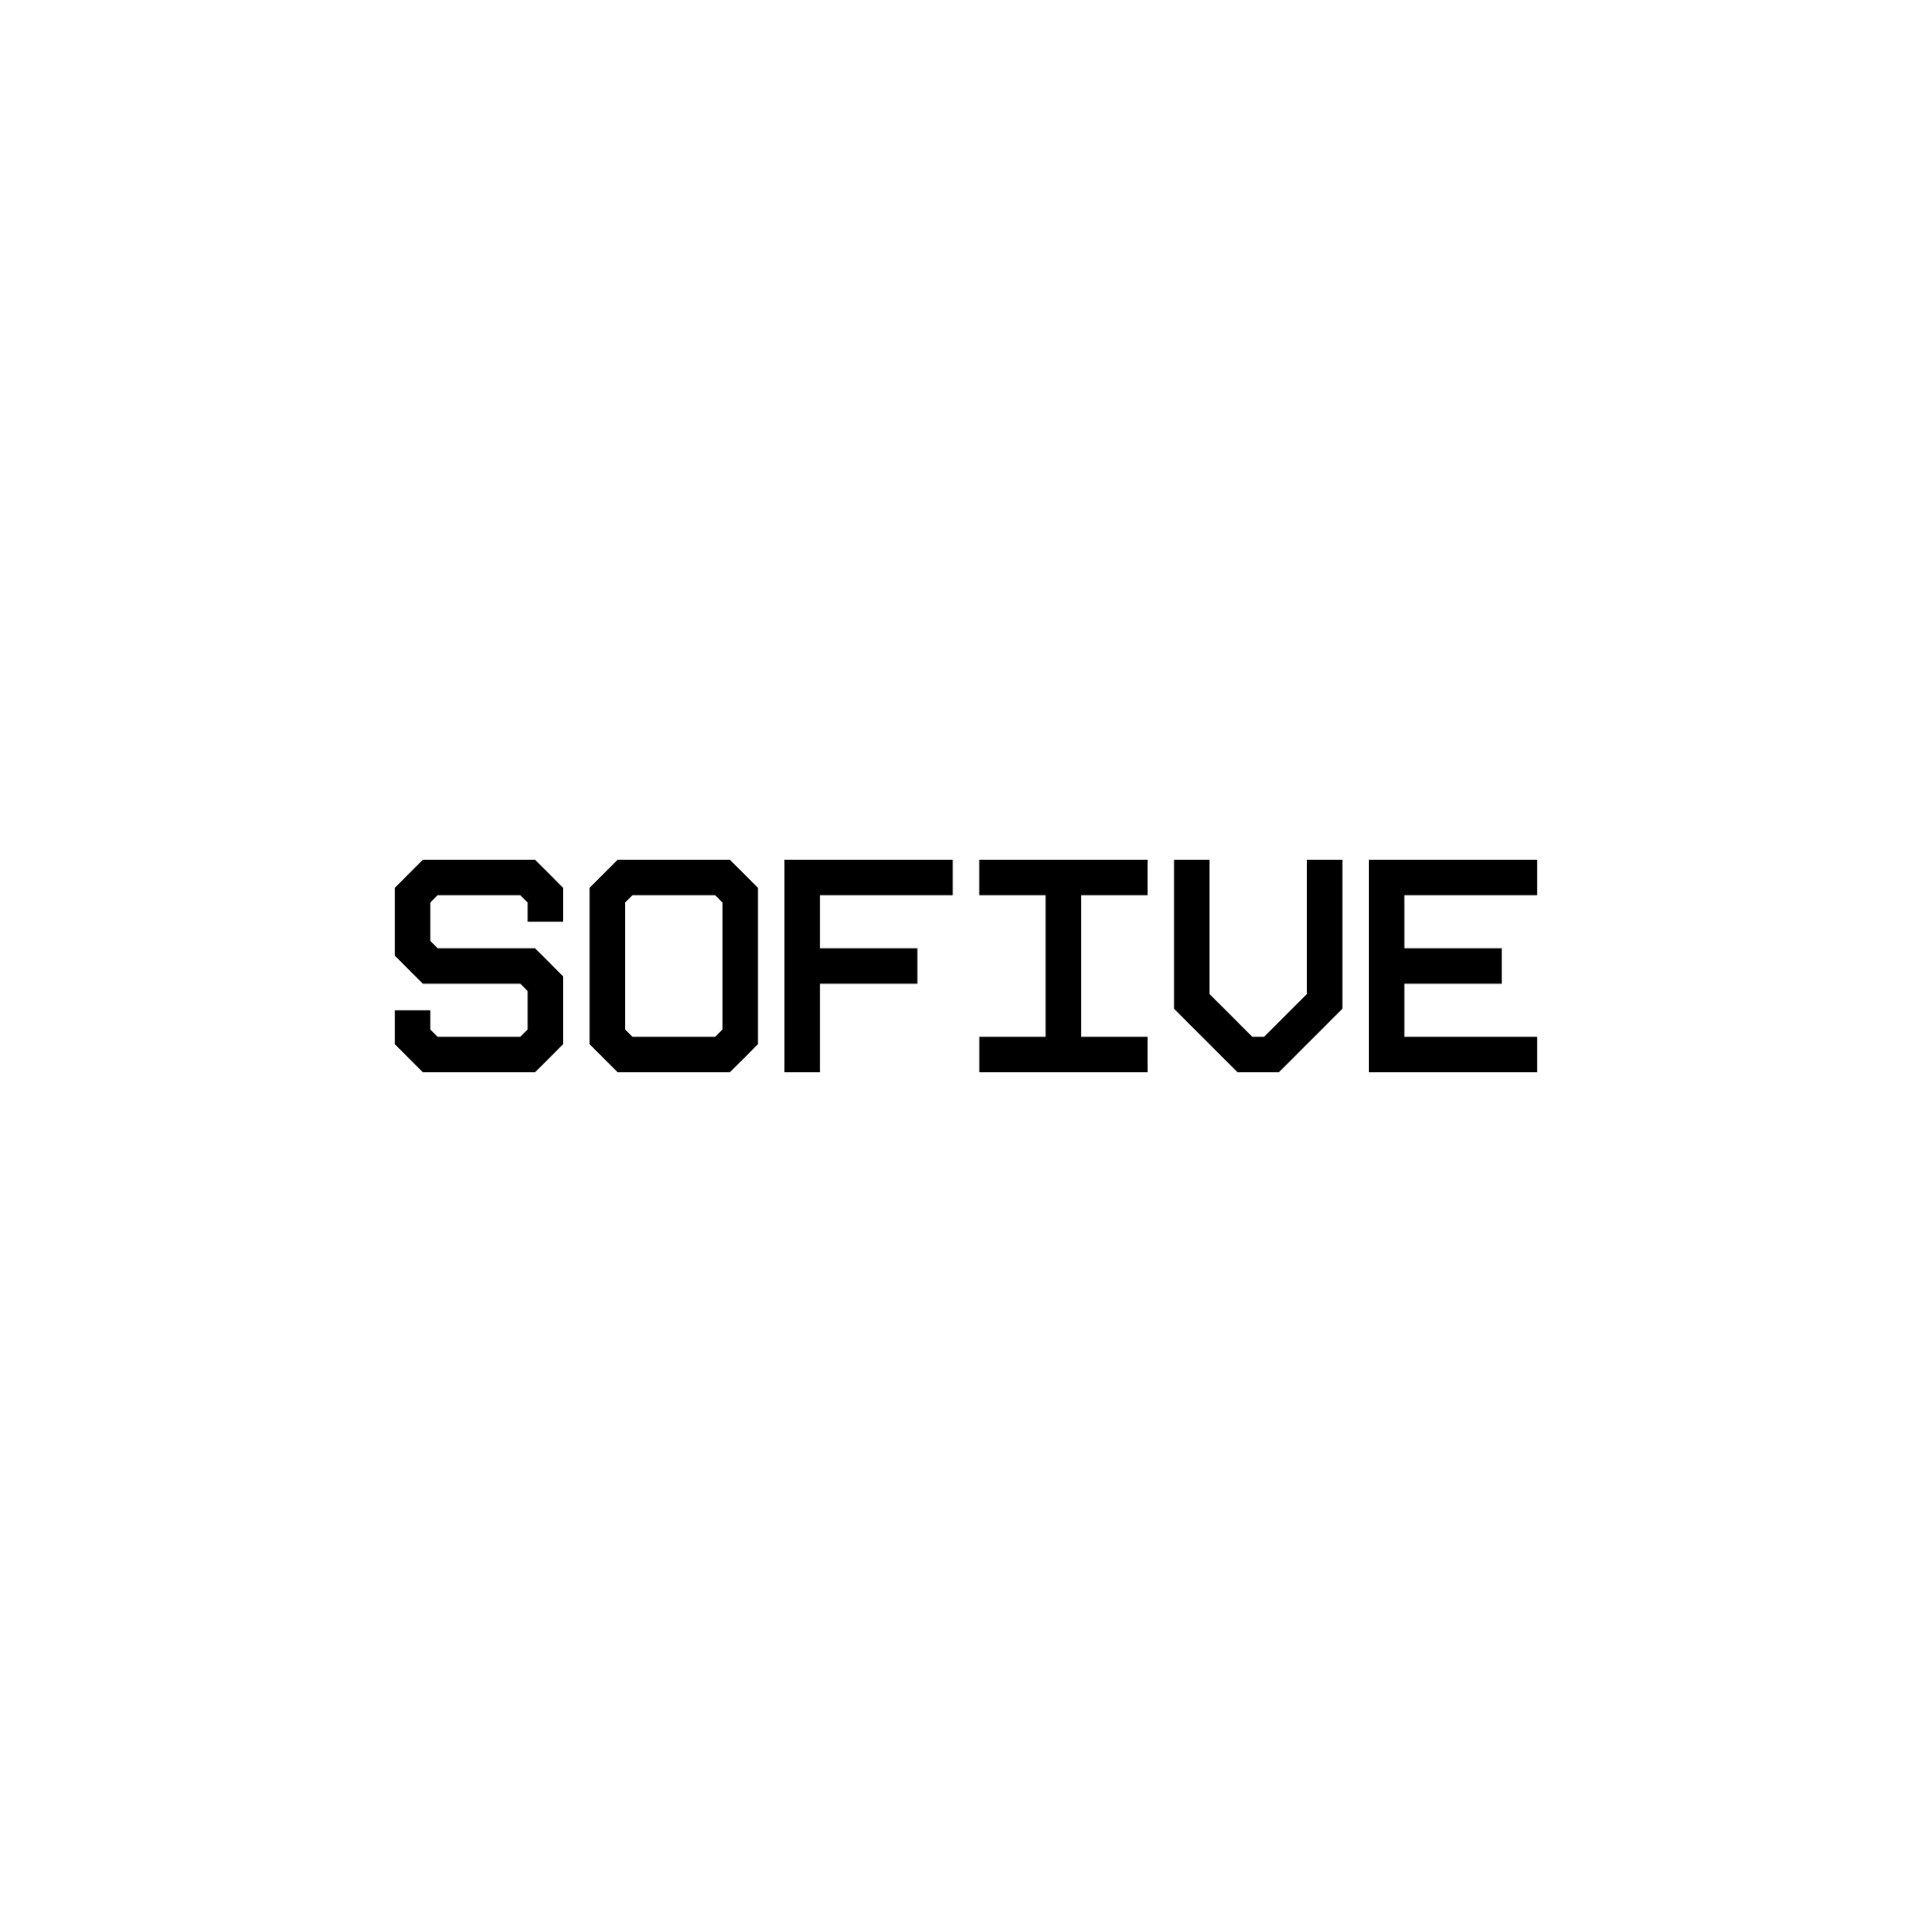 SOFIVE Logotype Horizontal